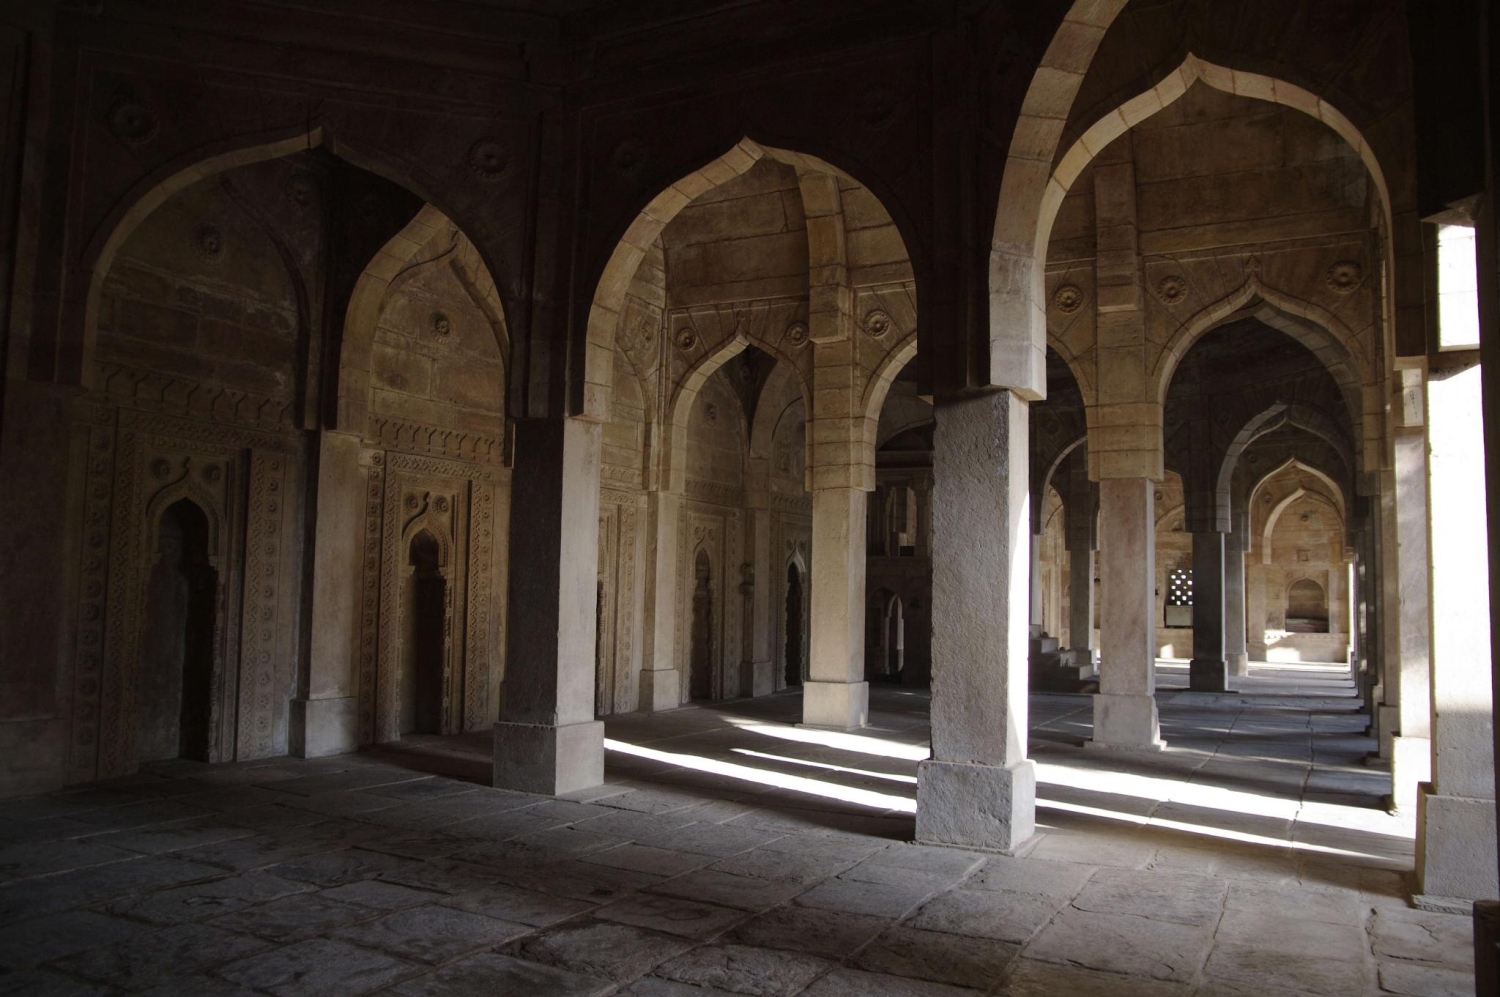 Interior view, prayer hall, mihrabs at left